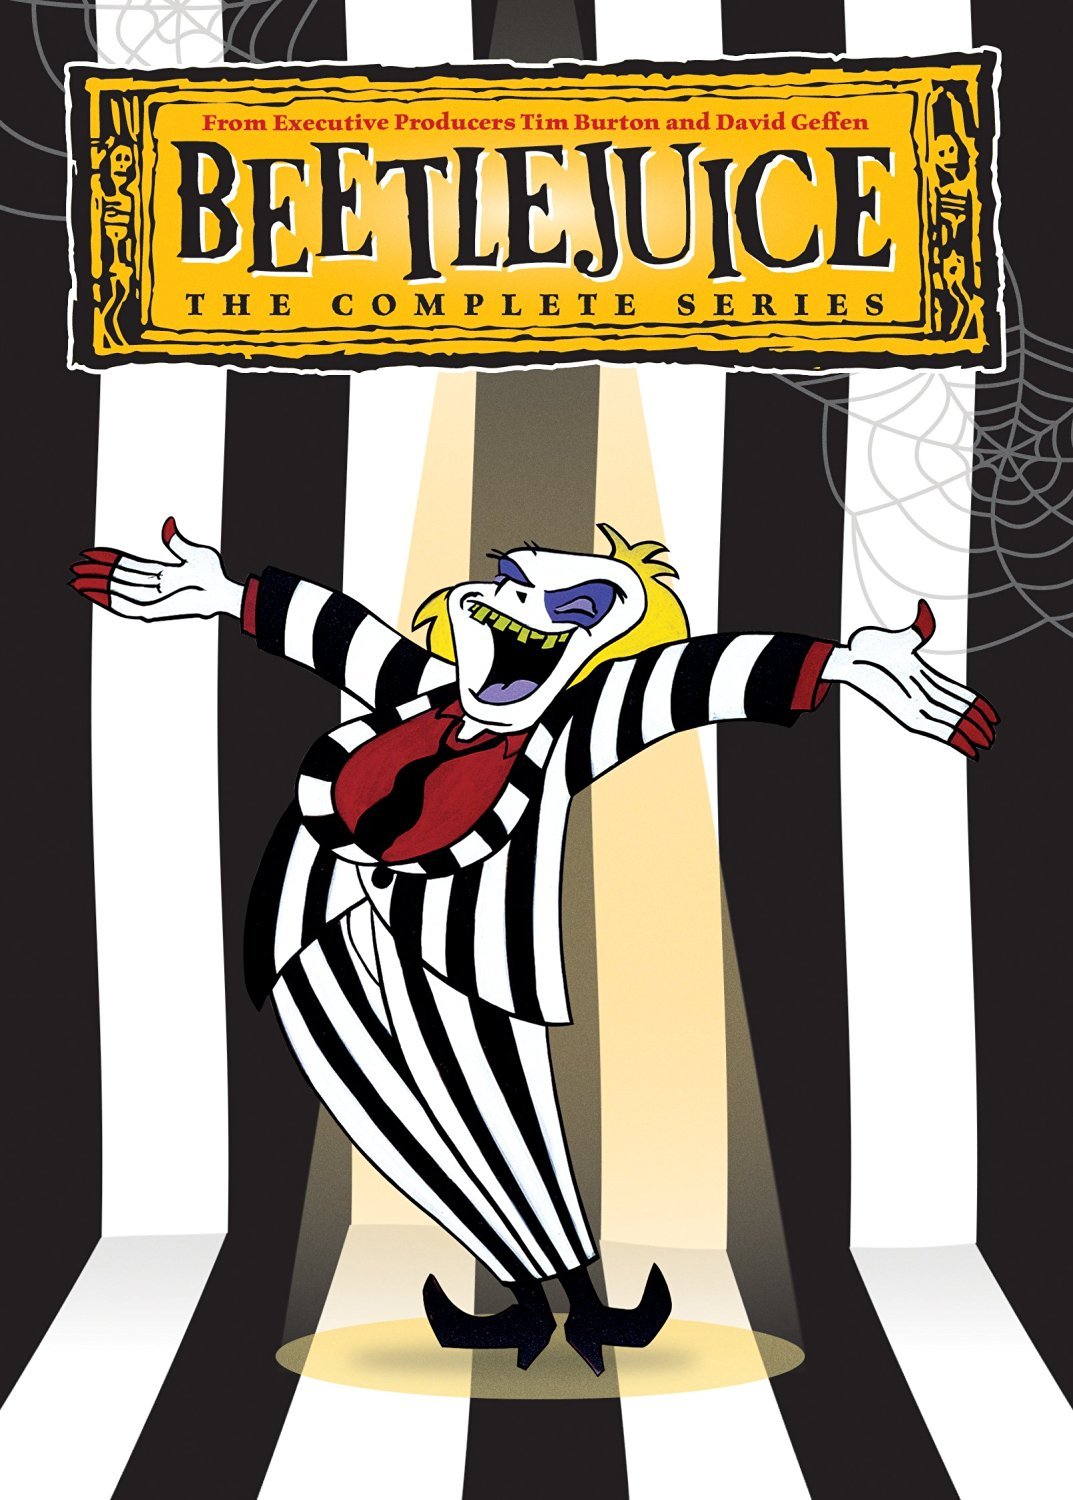 Beetlejuice 90s cartoon character